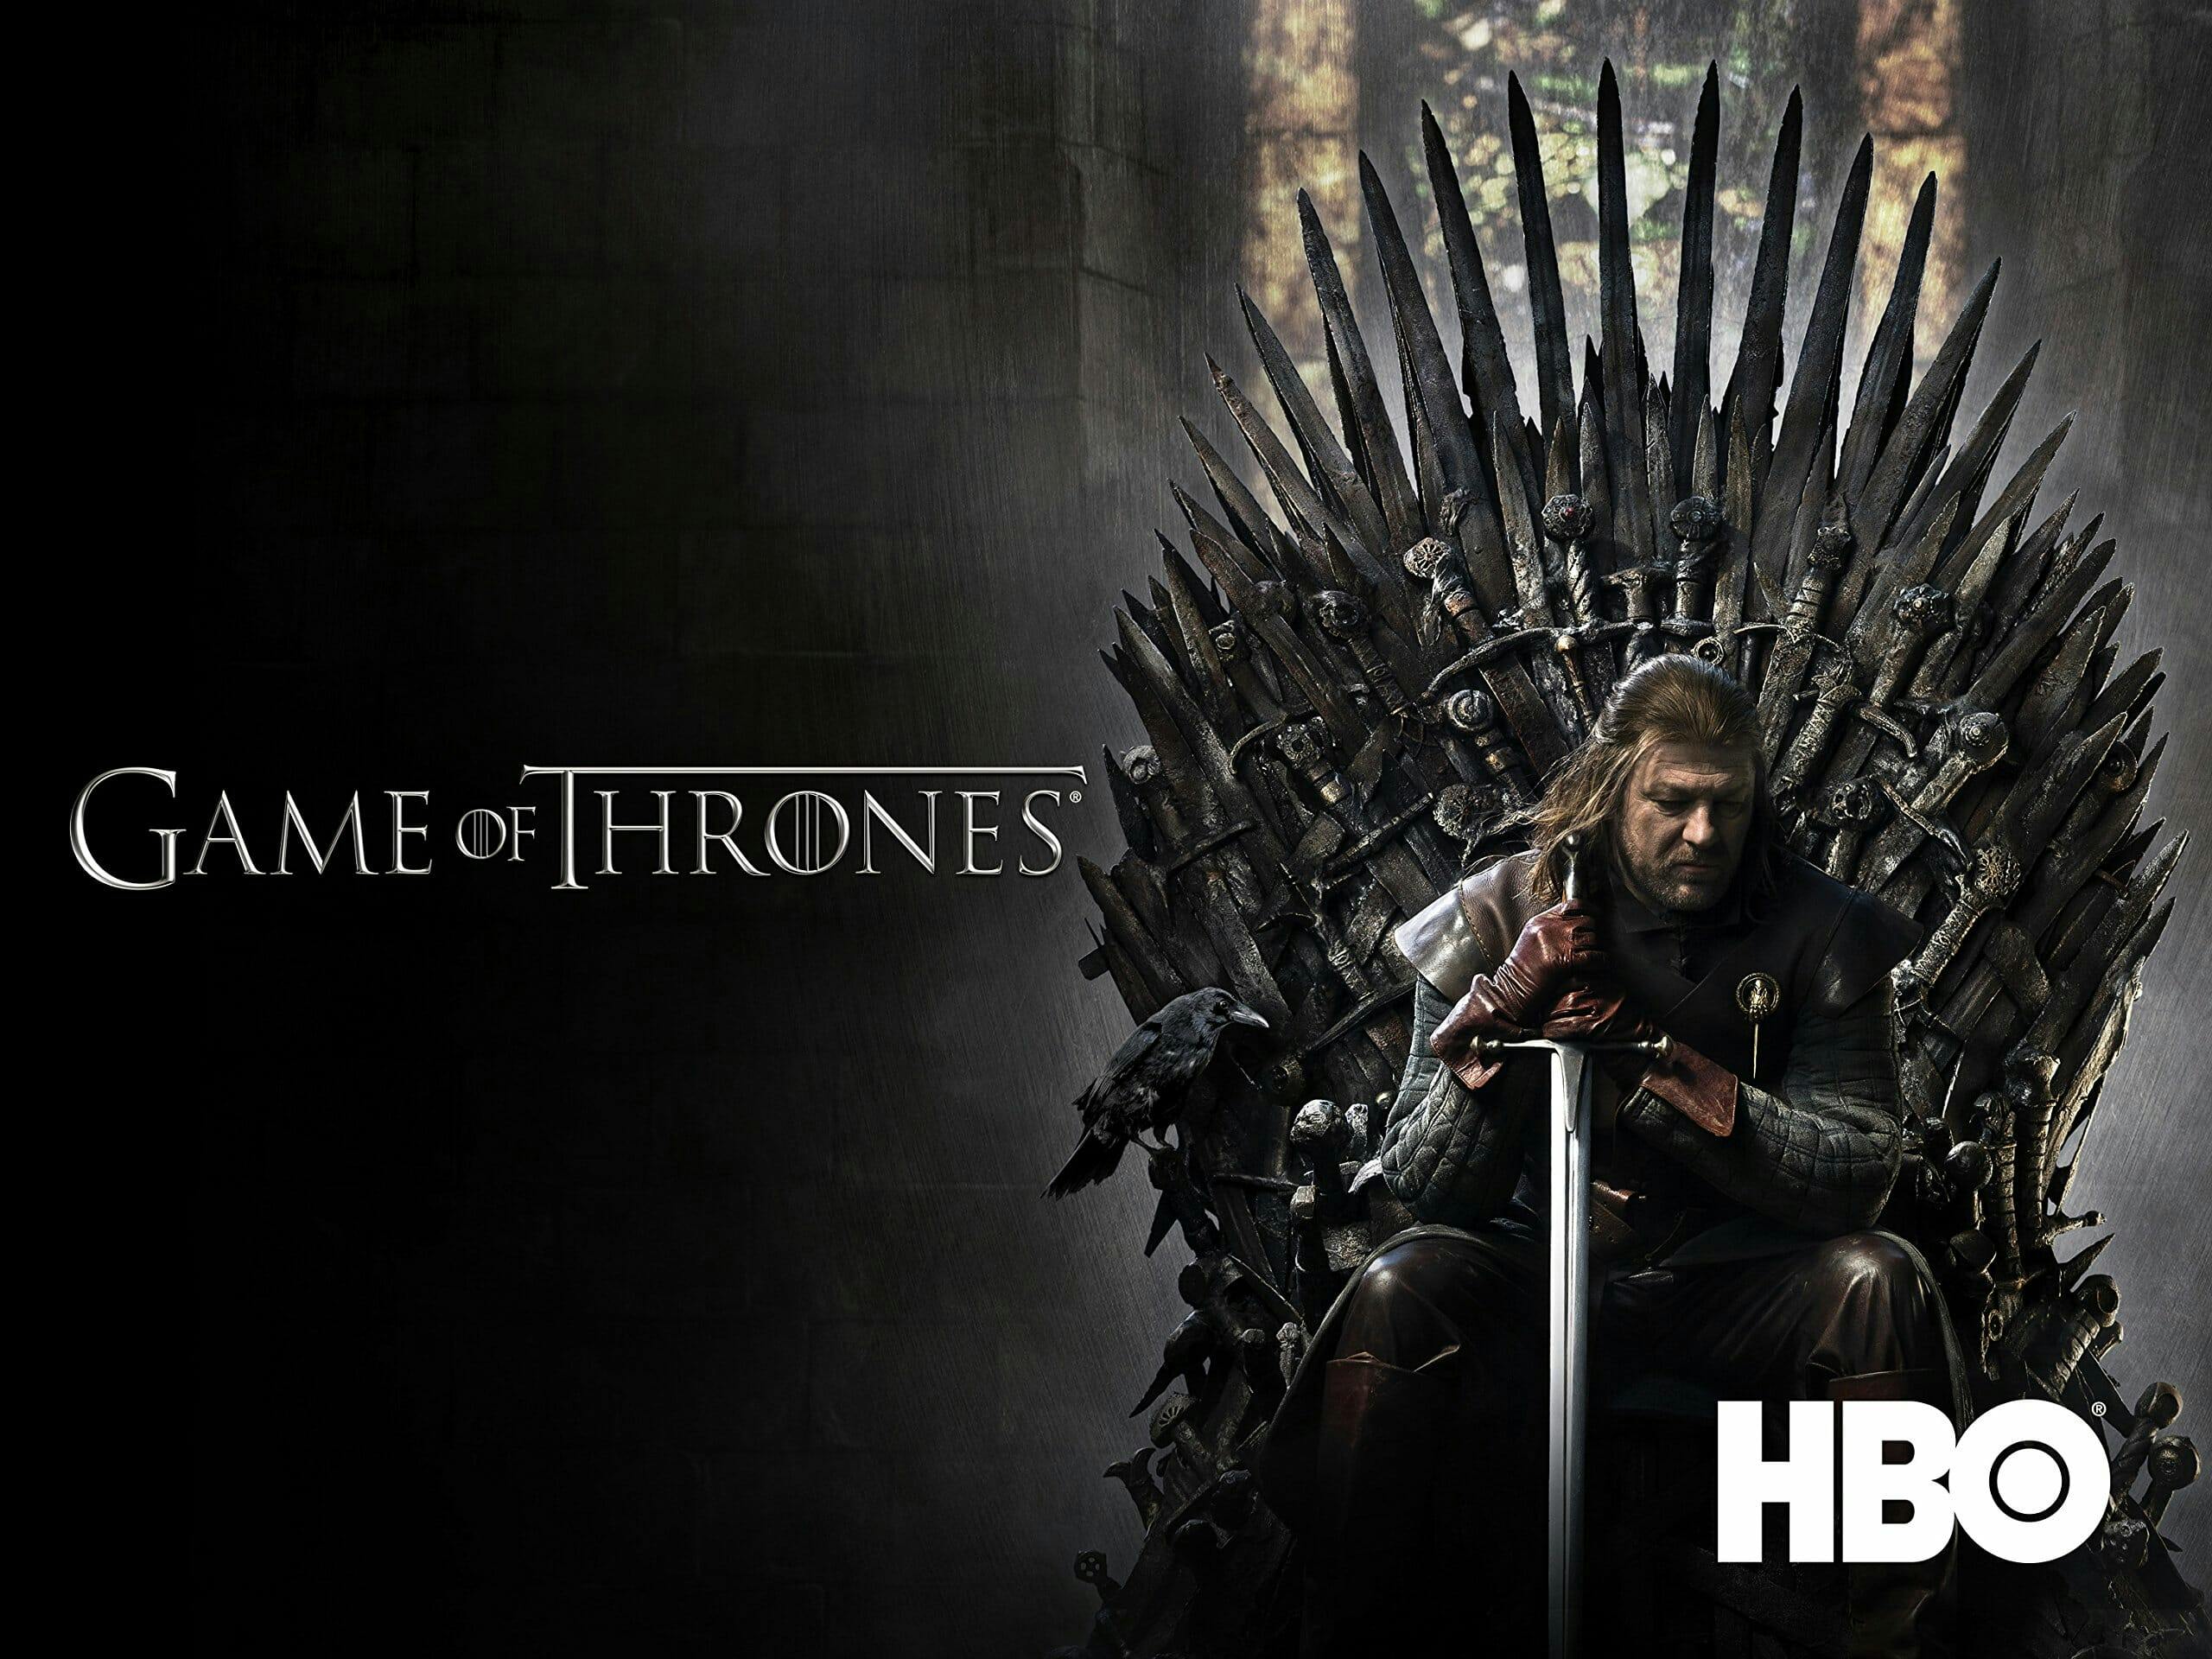 watch game of thrones season 8 episode 6 free on Amazon